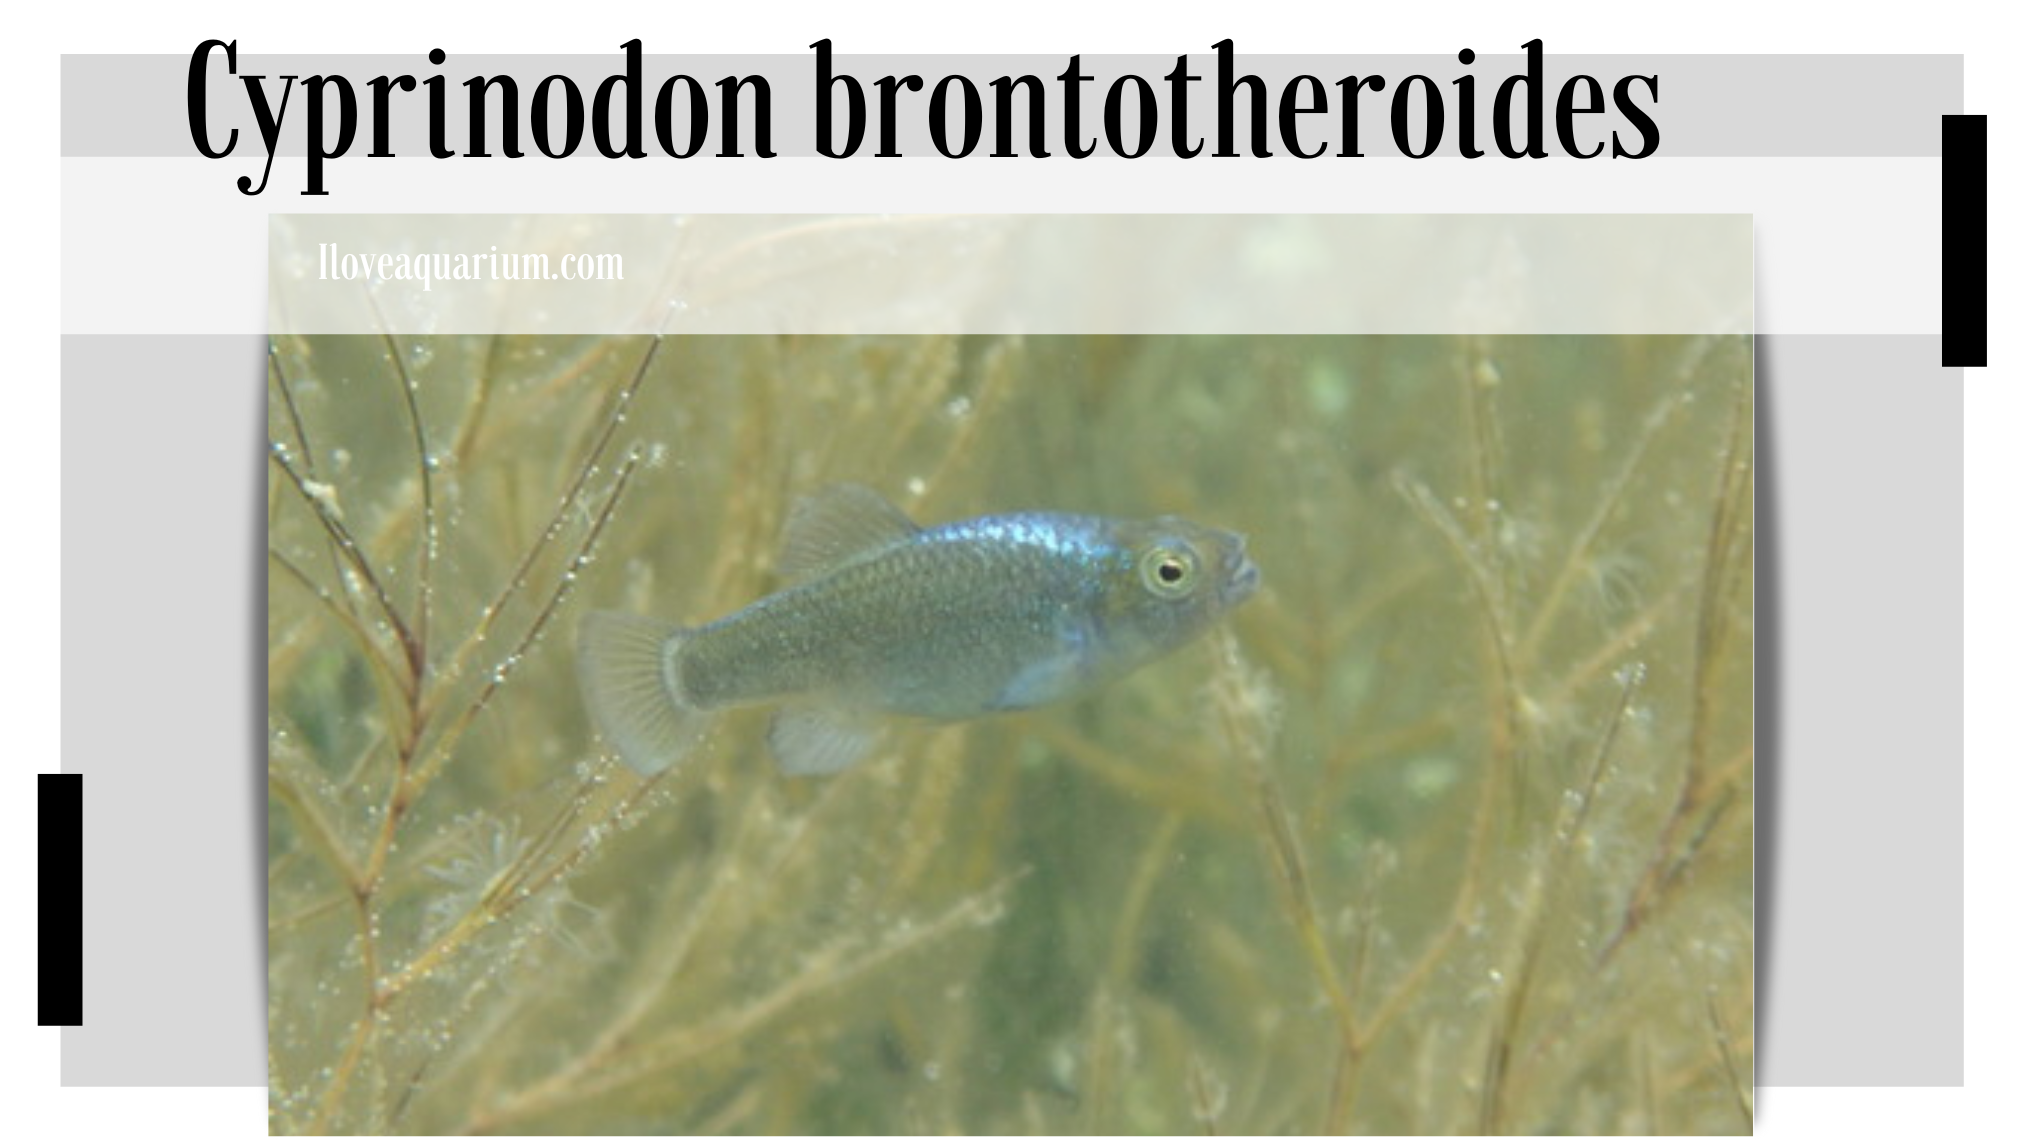 Cyprinodon brontotheroides (MARTIN & WAINWRIGHT, 2013) - Durophage Pupfish 